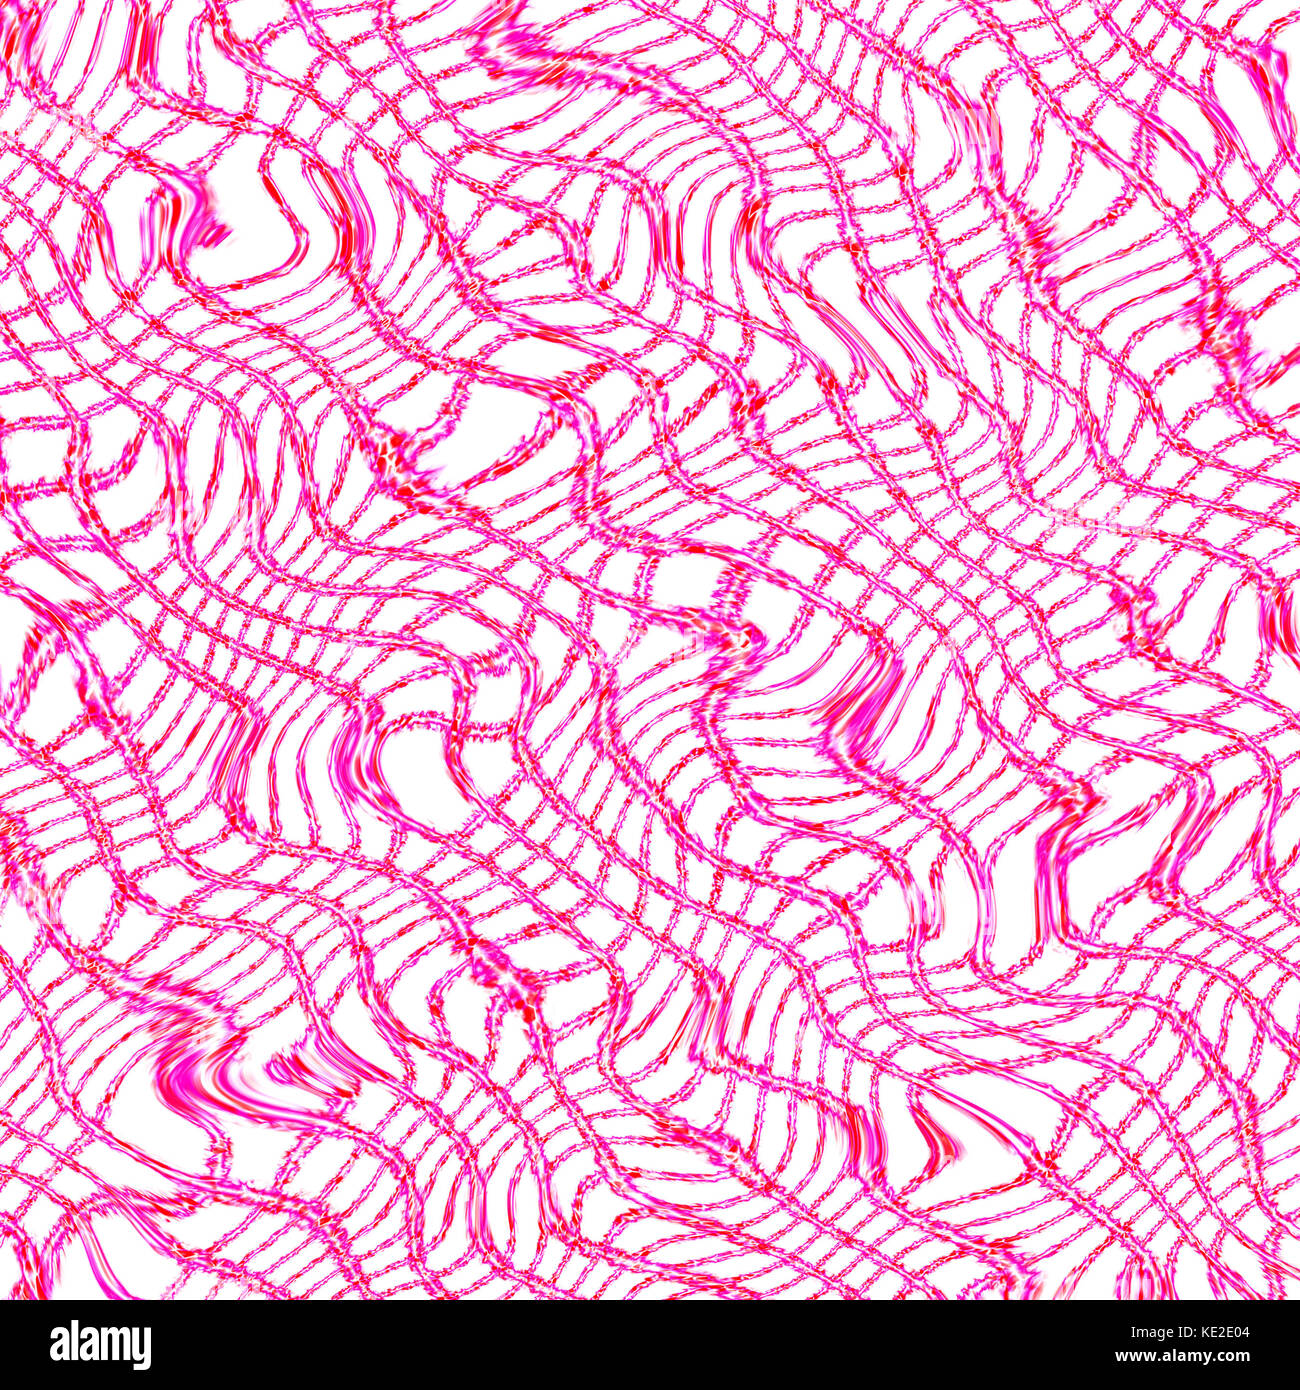 Pink mesh background Stock Photo